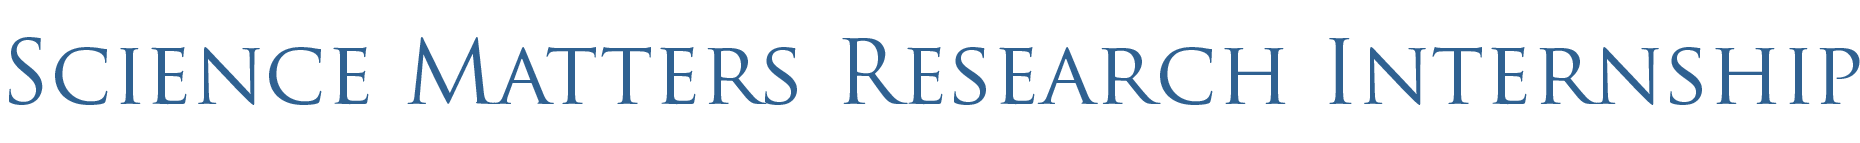 Science Matters Research Internship logo